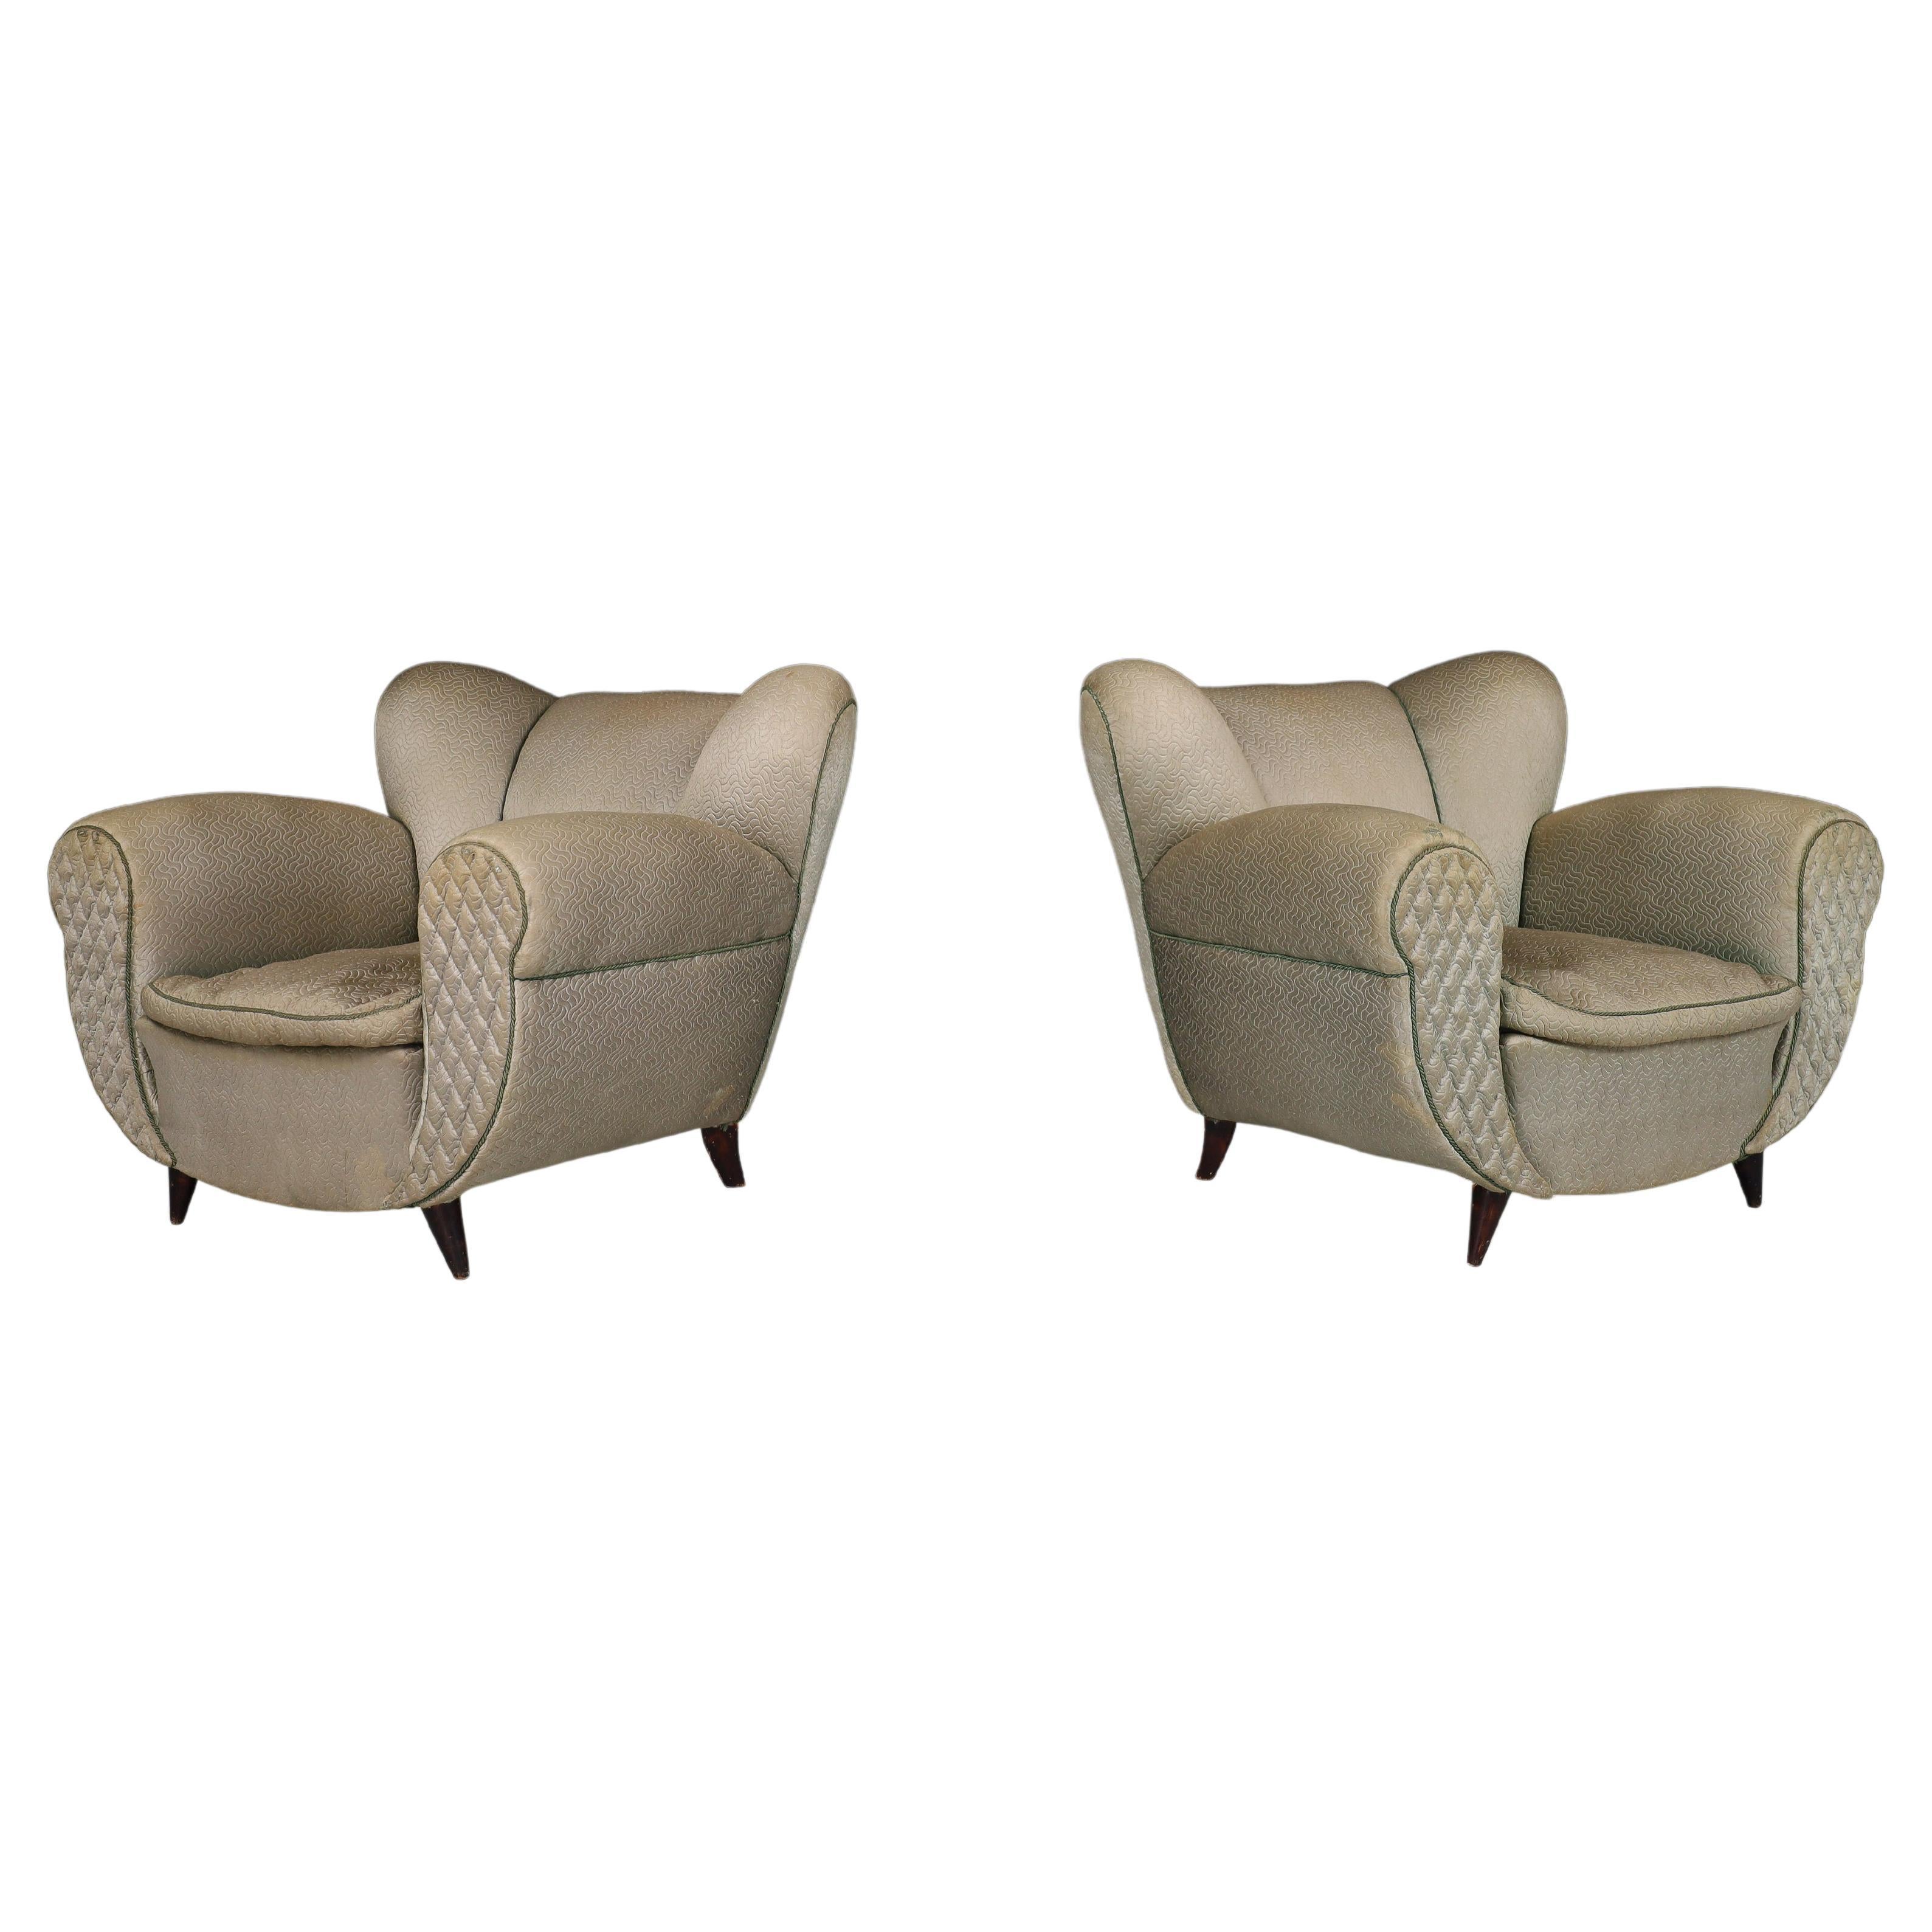 Uglielmo Ulrich Art Deco Lounge Chairs in Original Fabric, Italy 1930s